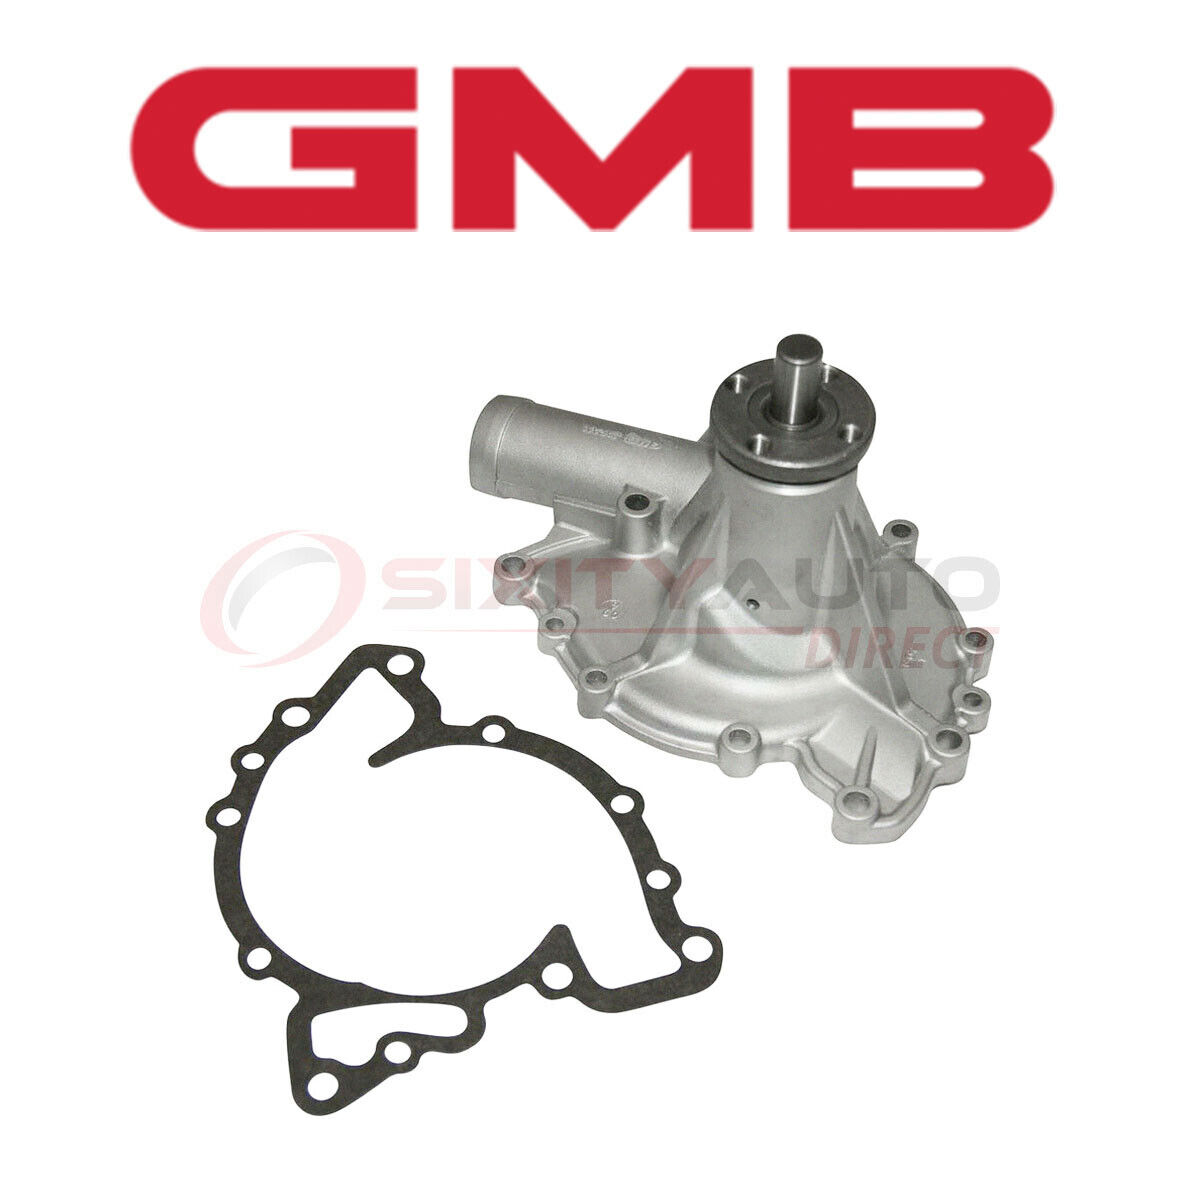 GMB Water Pump for 1978-1984 Oldsmobile Cutlass Calais 3.8L V6 – Engine un